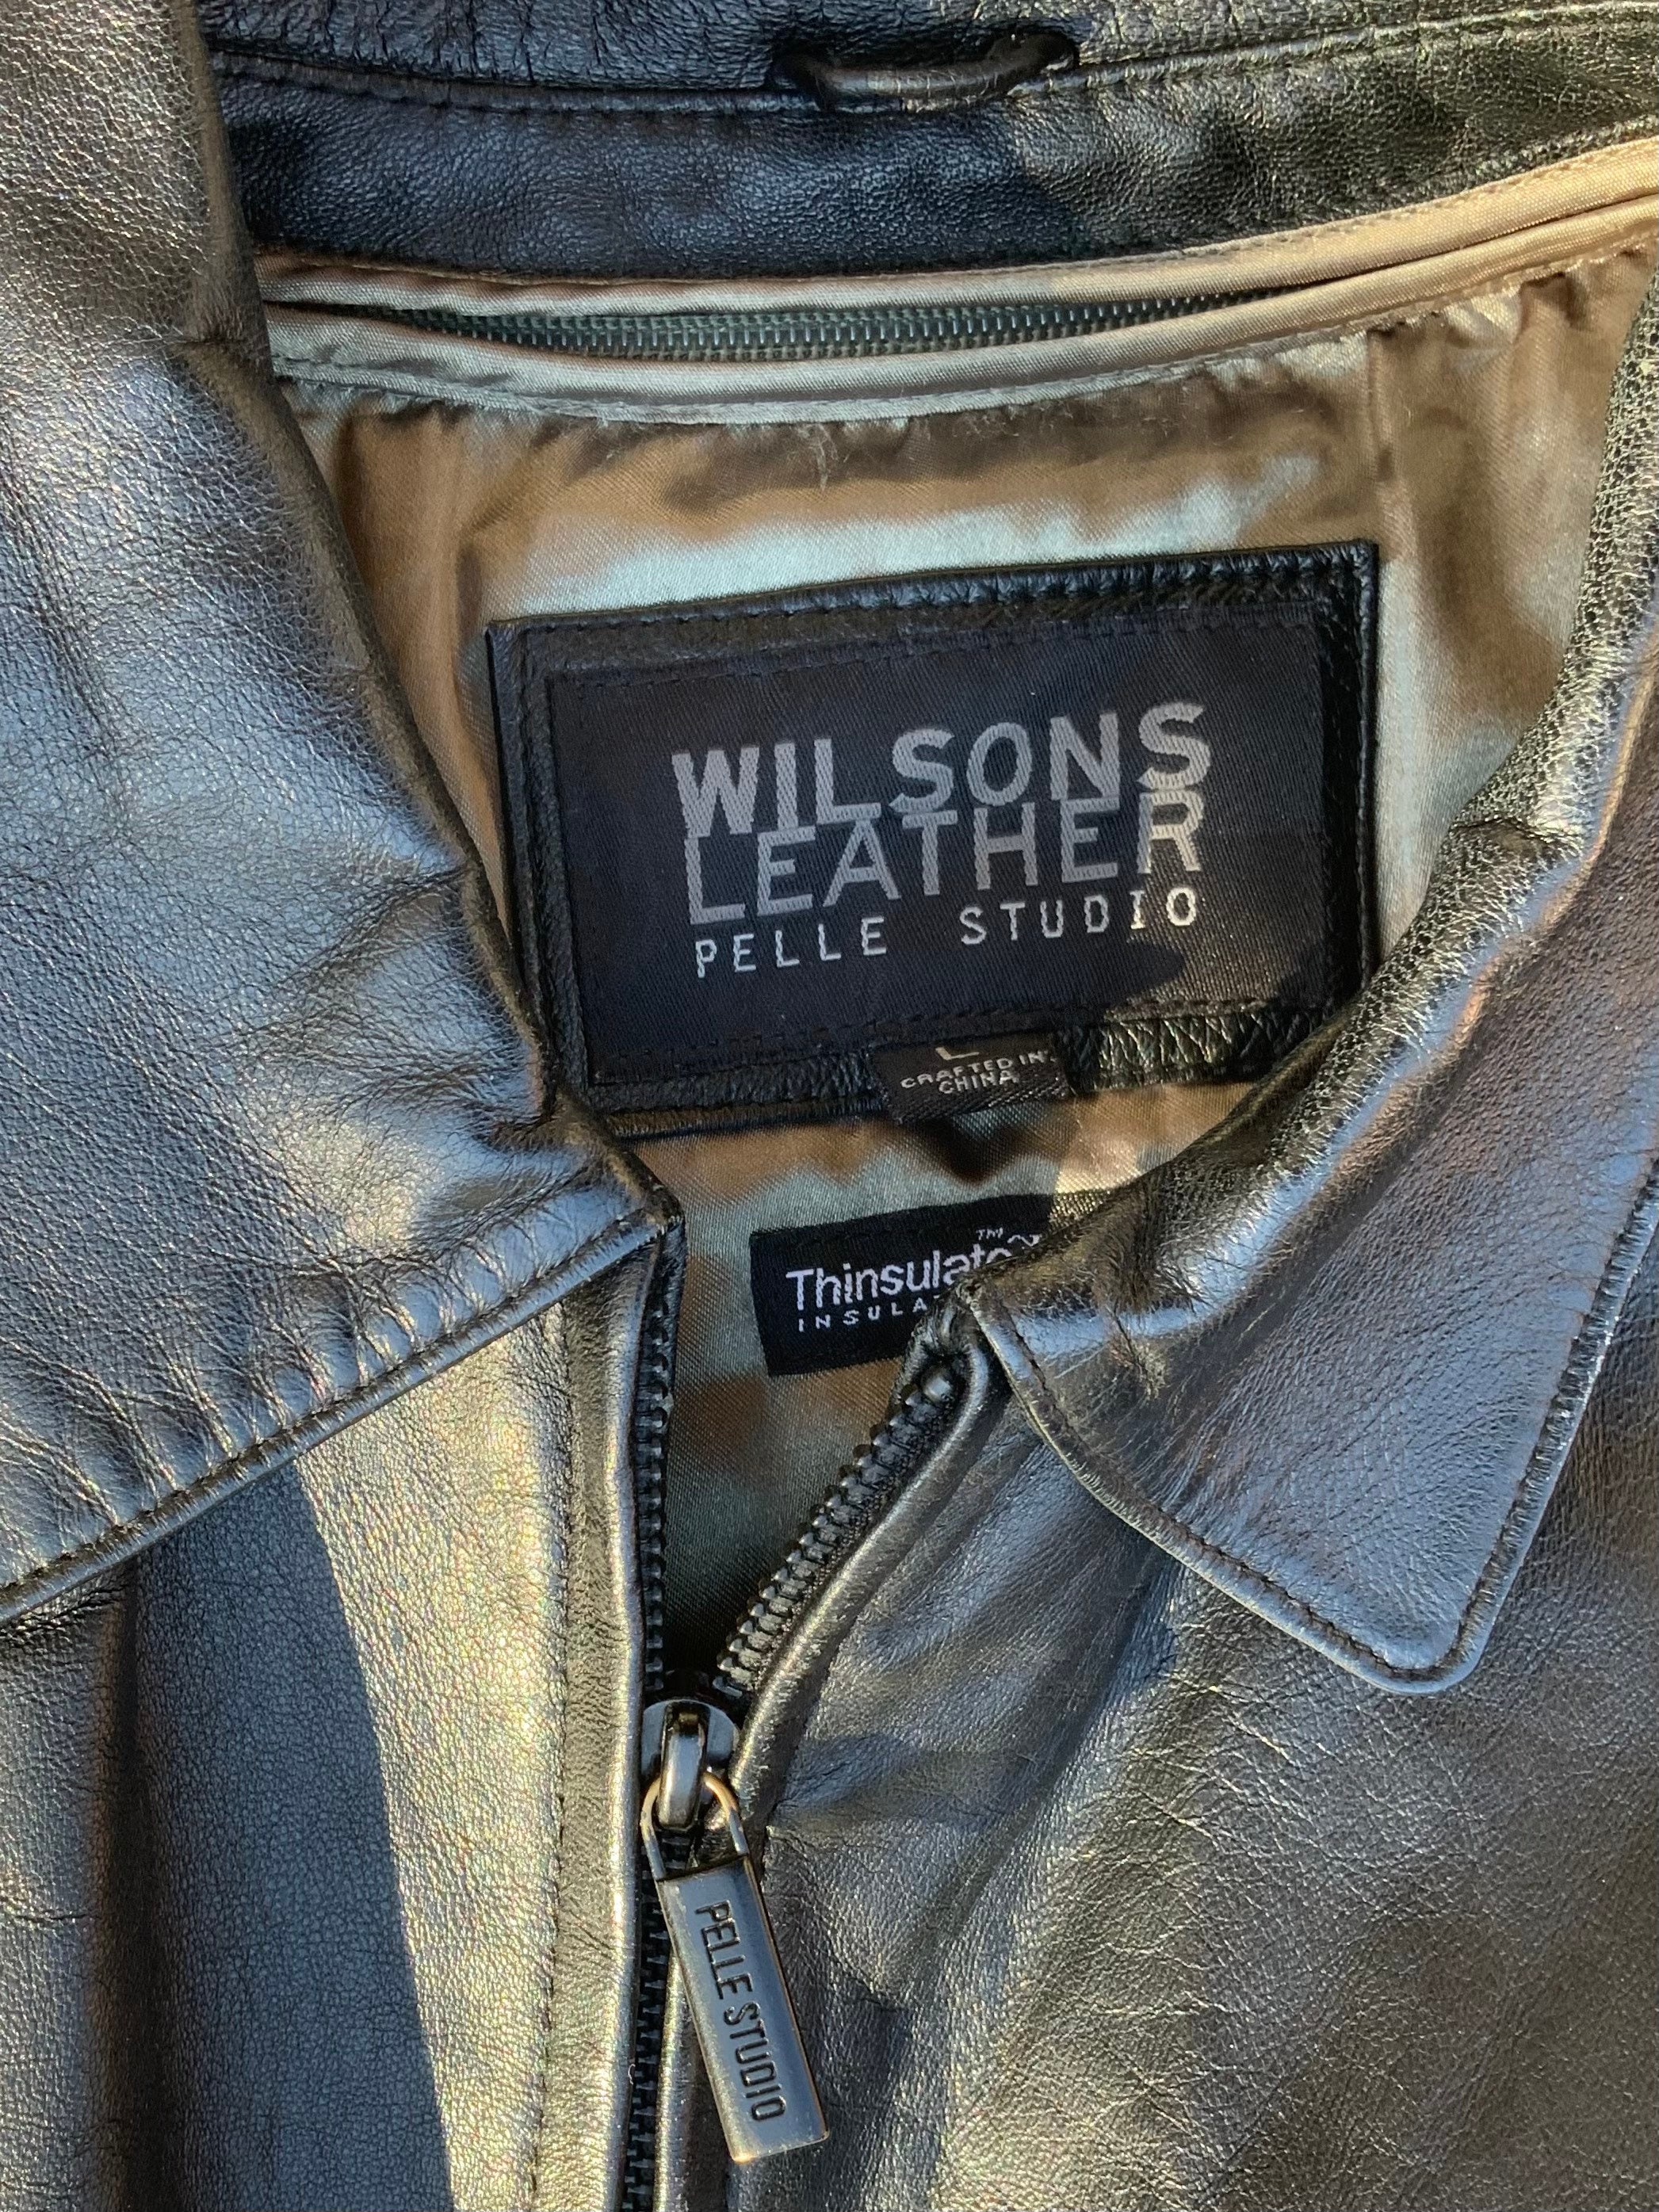 Wilsons vintage Leather jacket blog.knak.jp